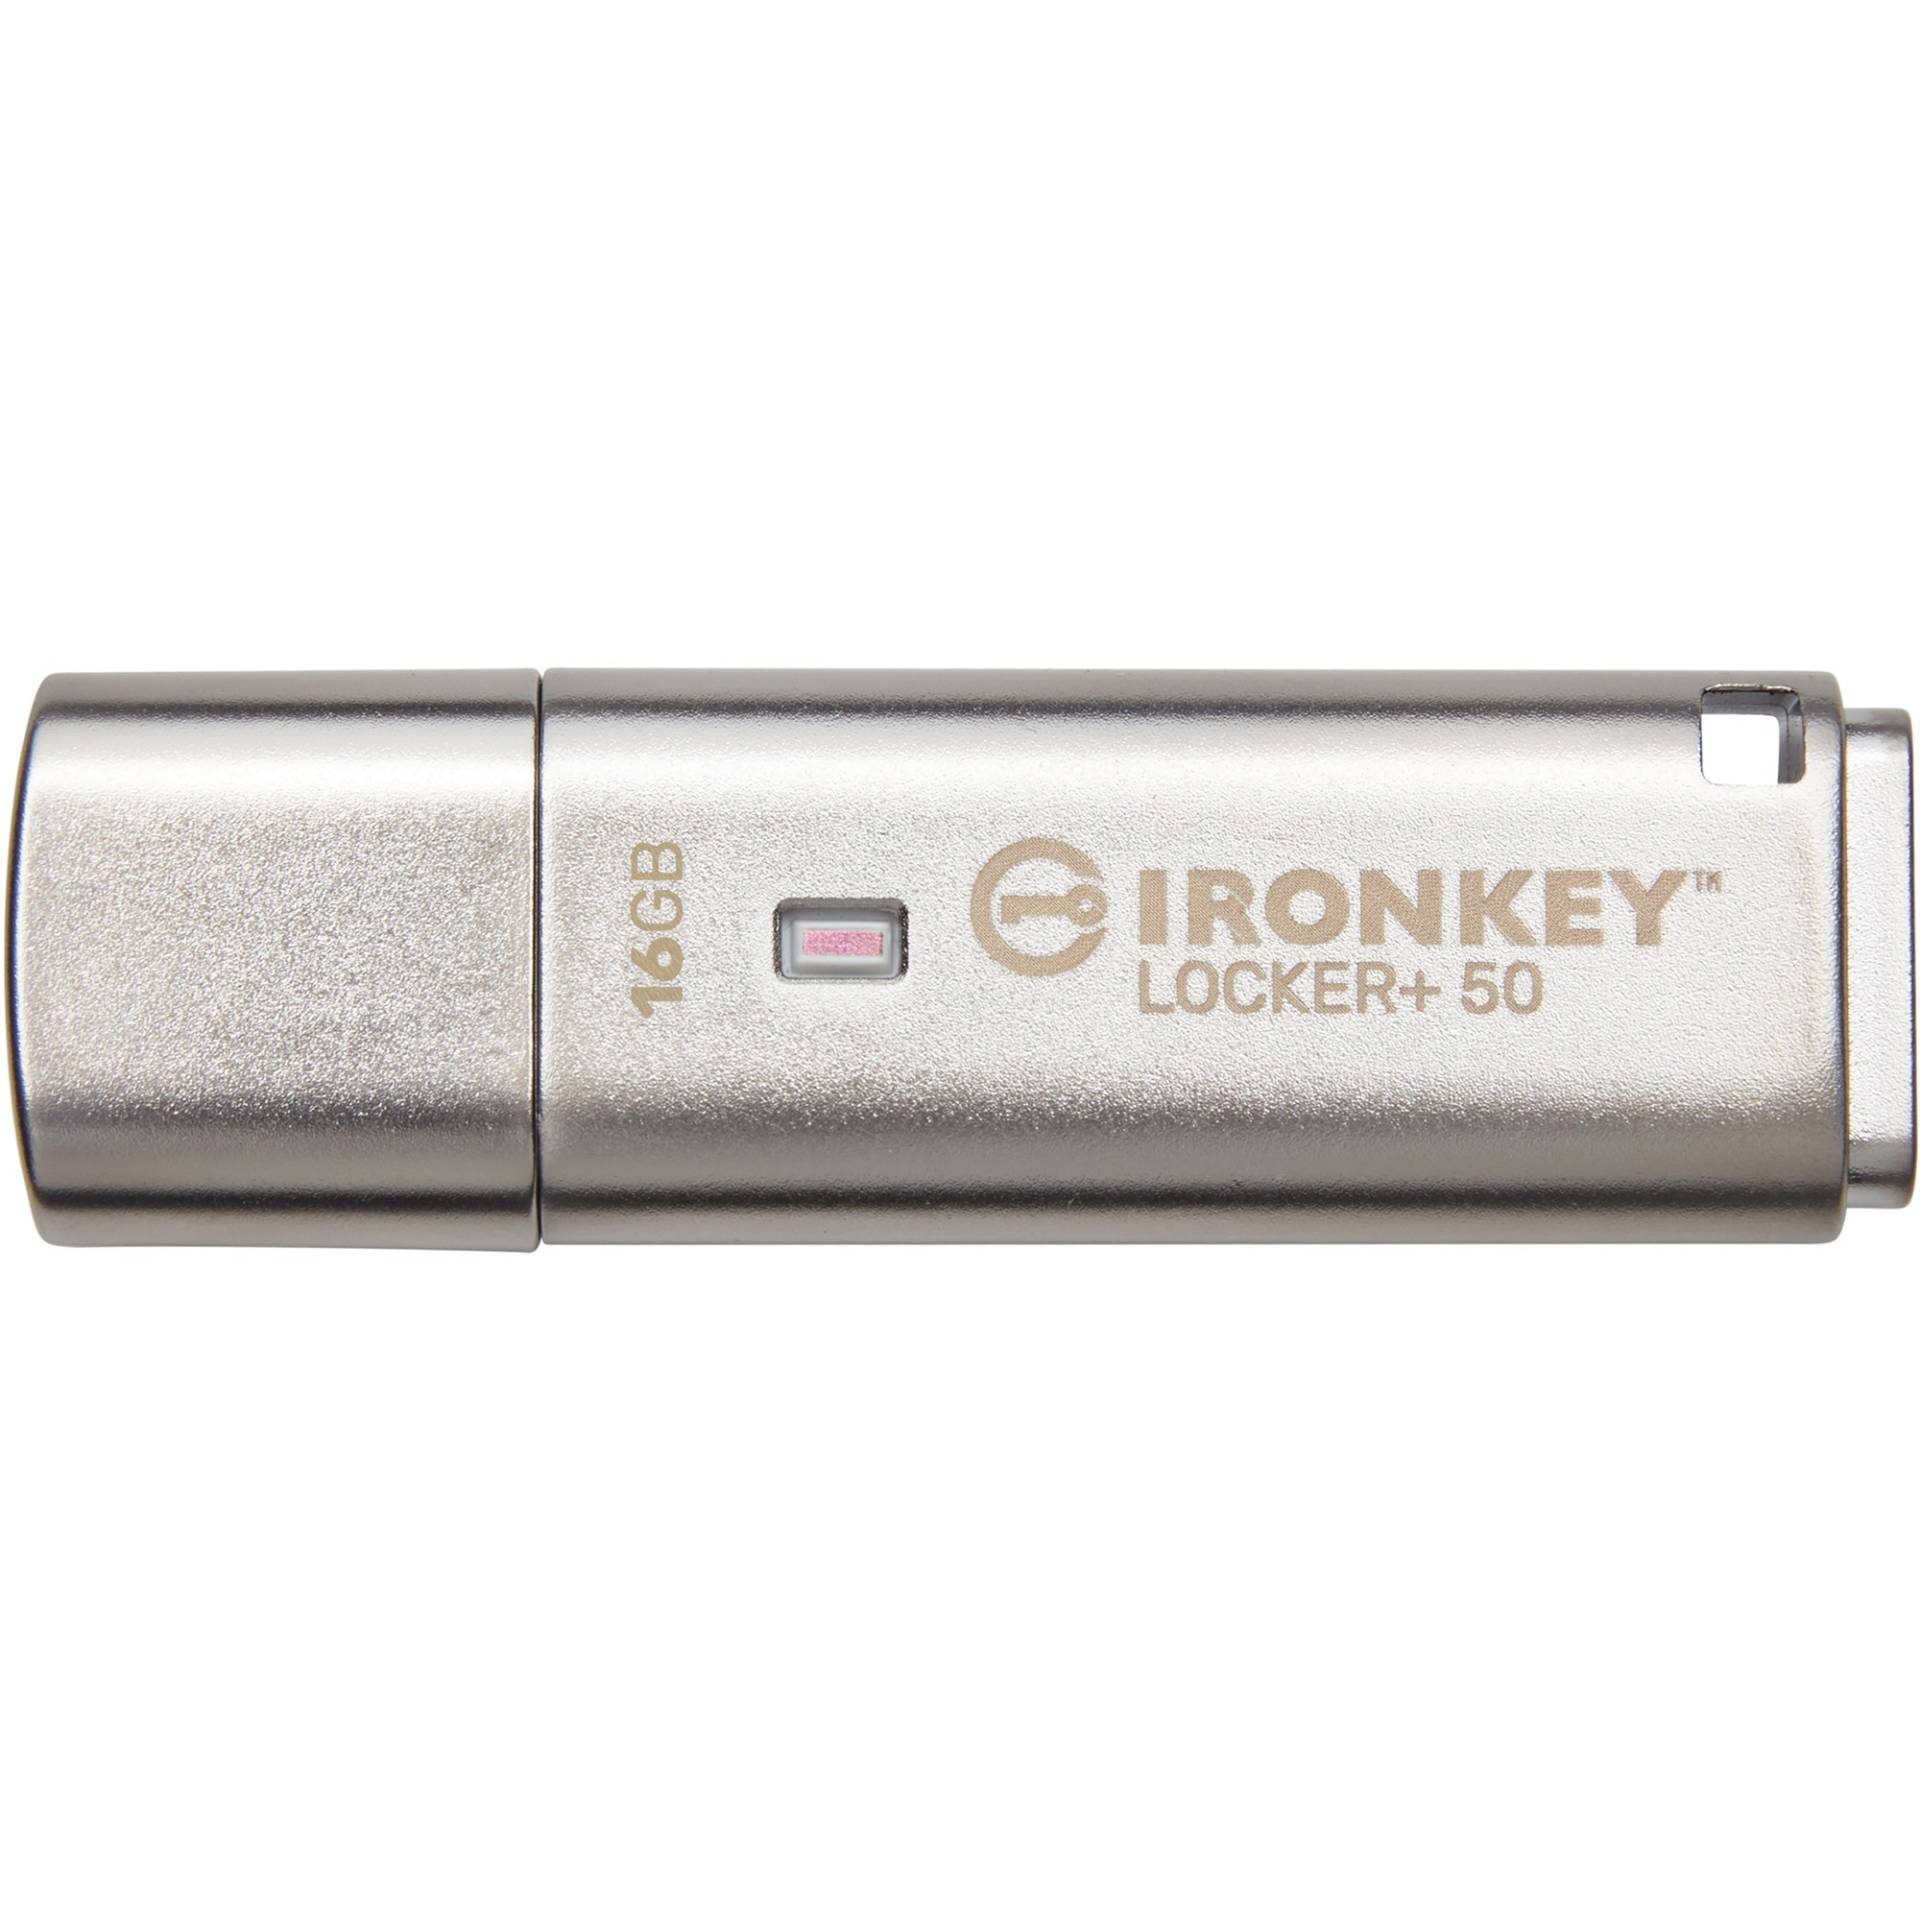 IronKey Locker+ 50 16 GB, USB-Stick von Kingston